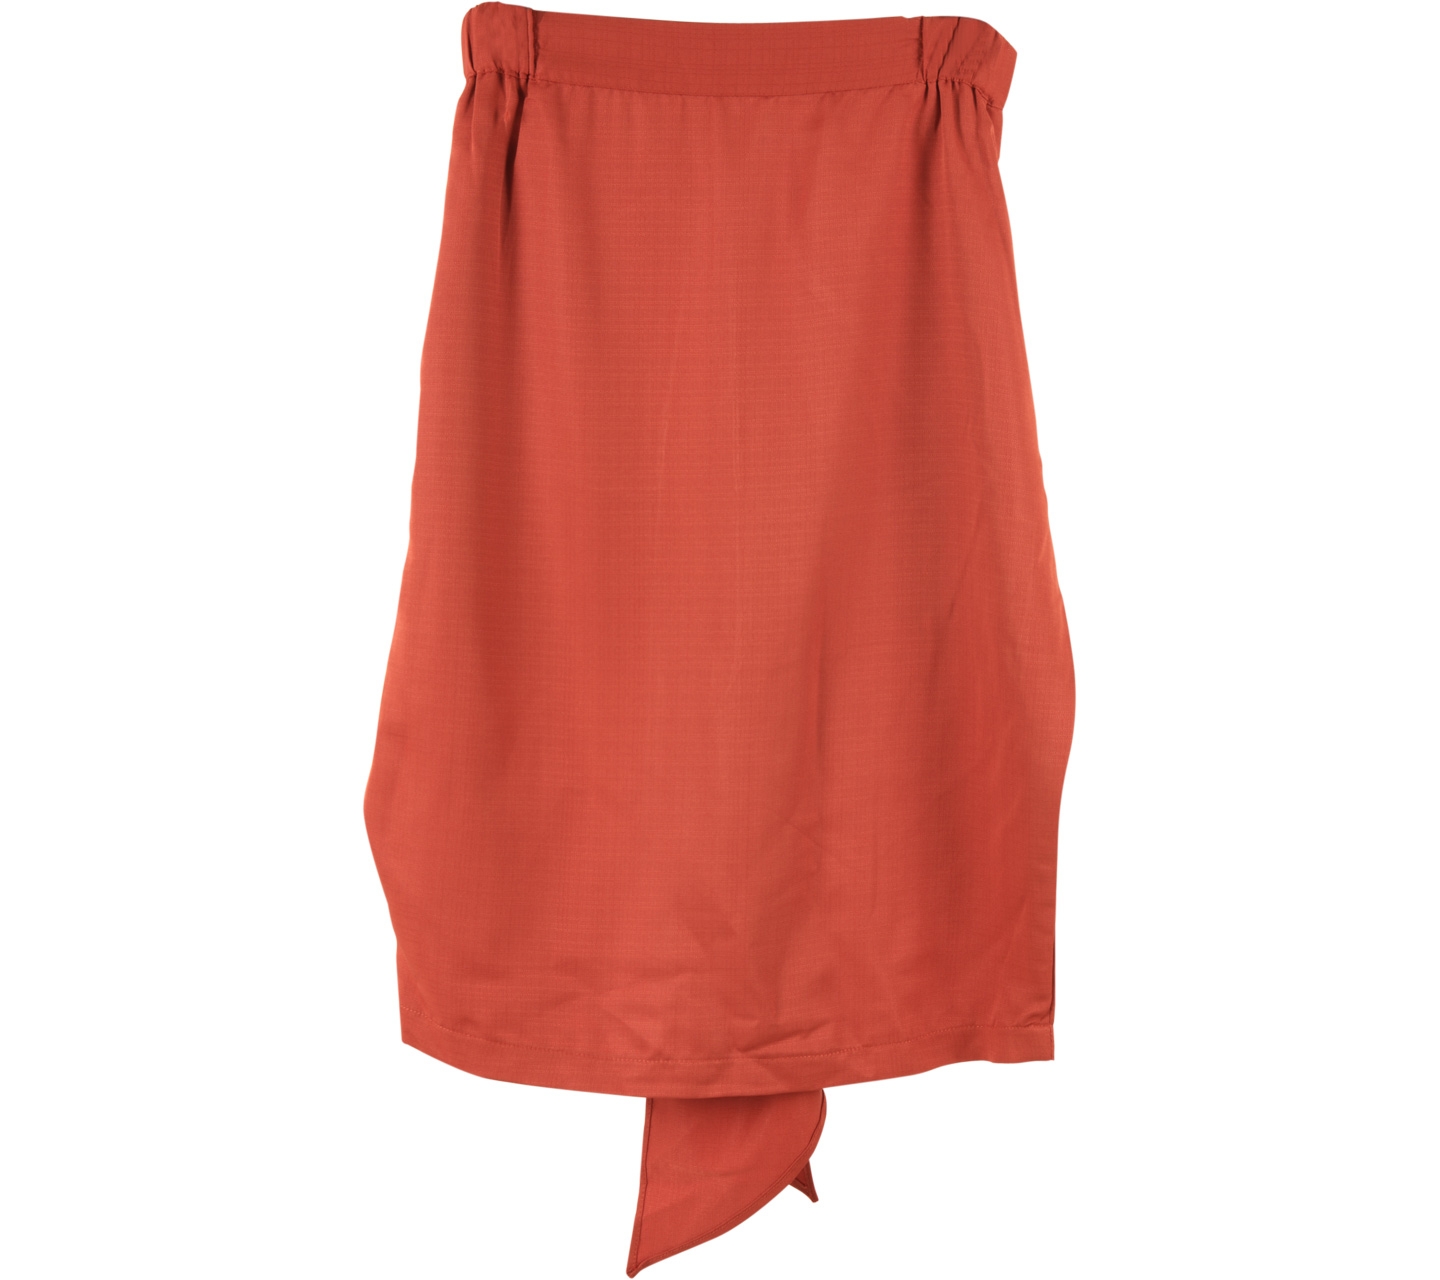 VOW Orange Tied Skirt